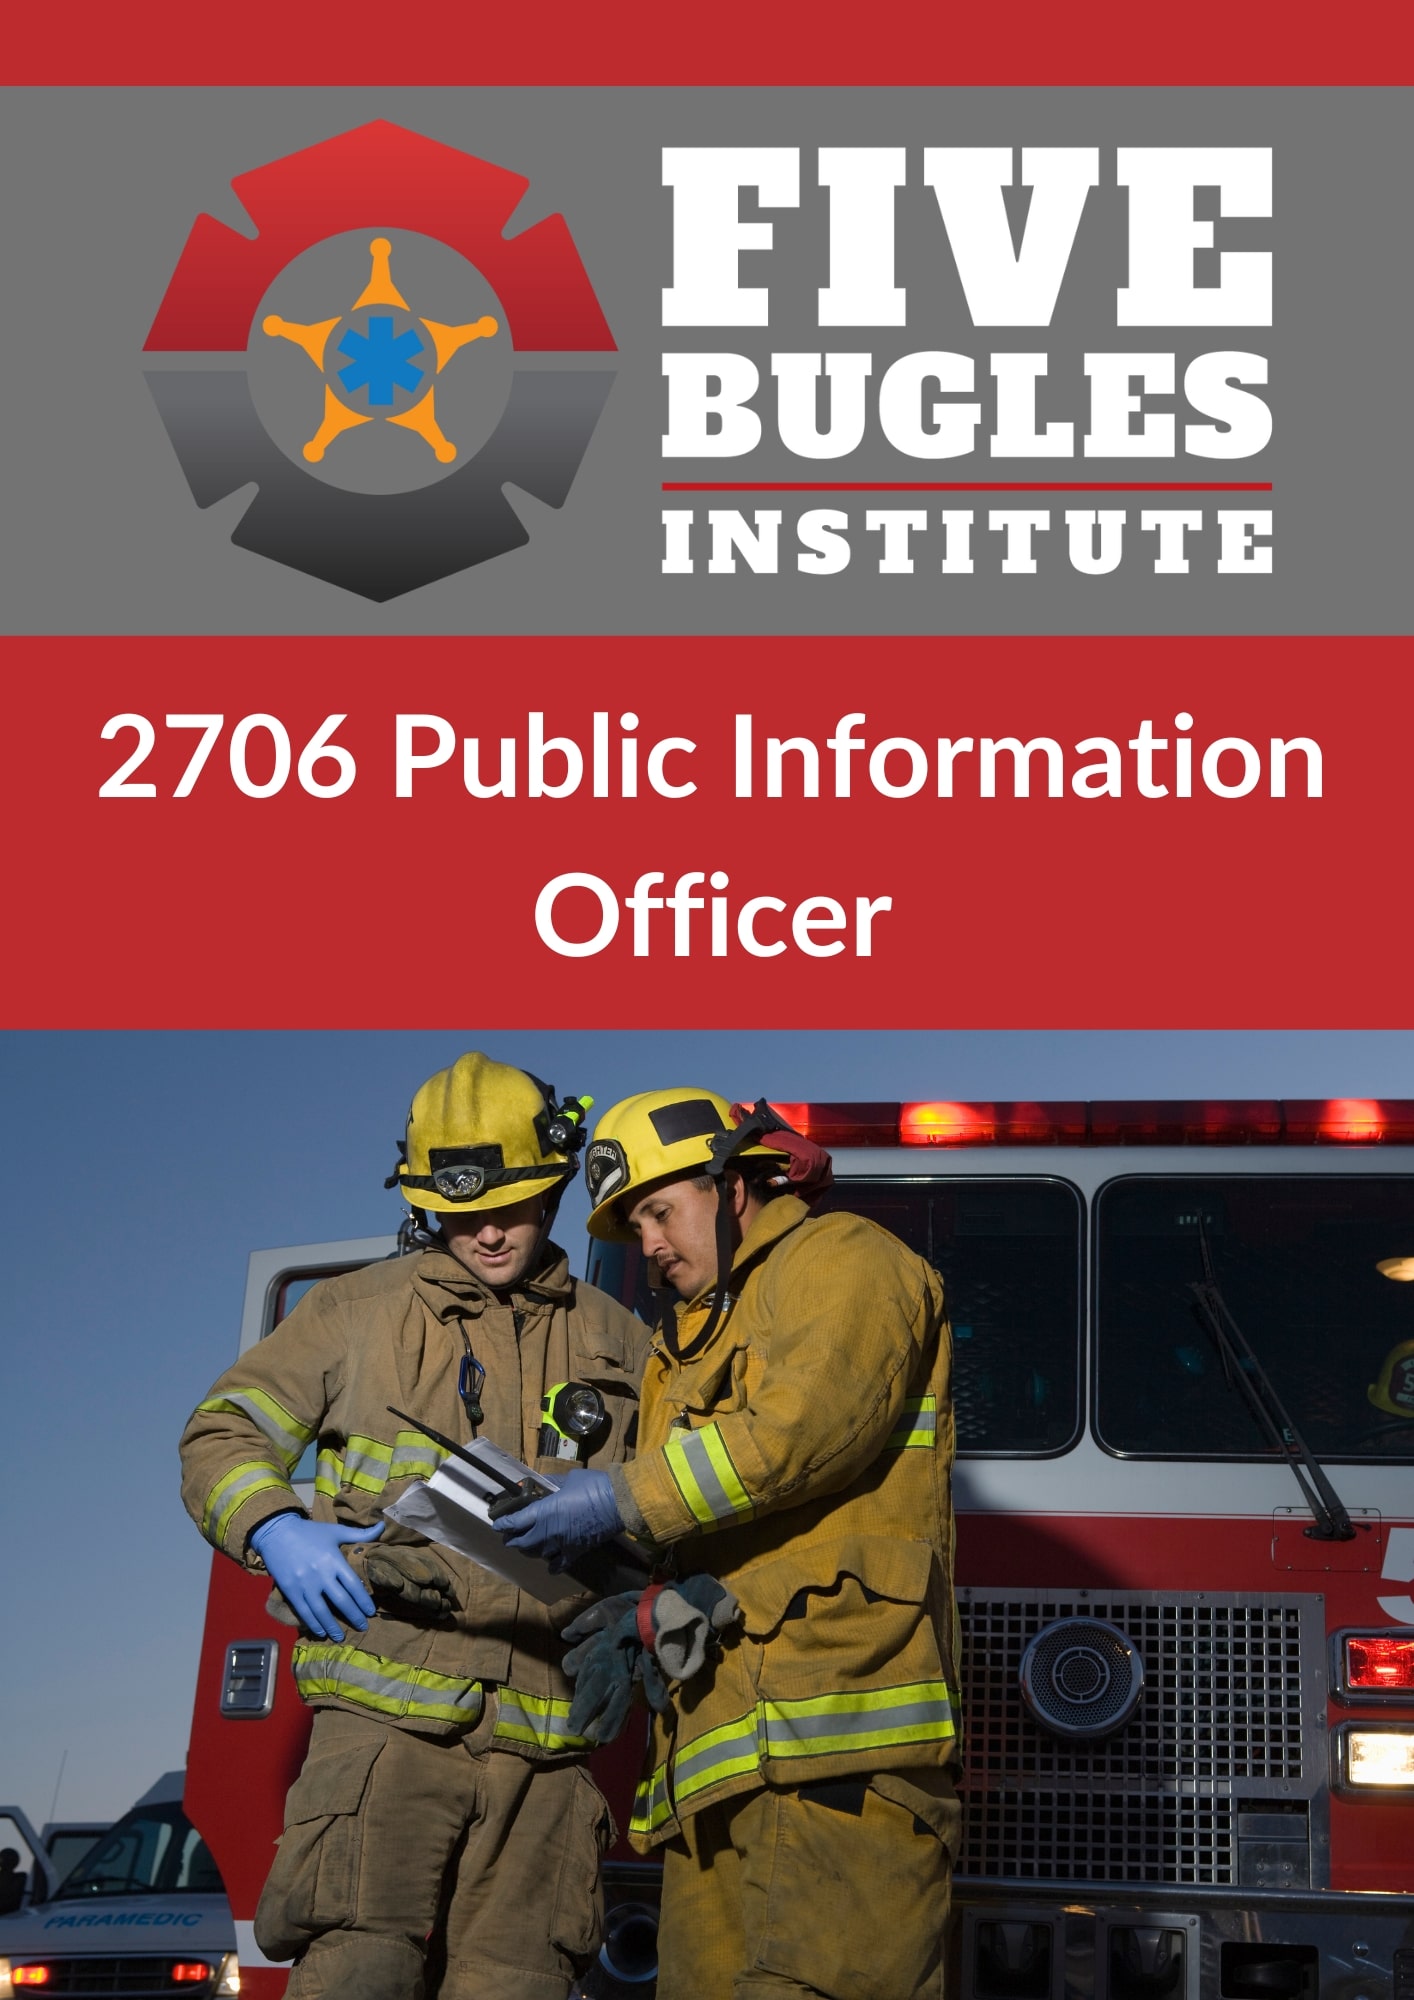 2706-public-information-officer-five-bugles-institute